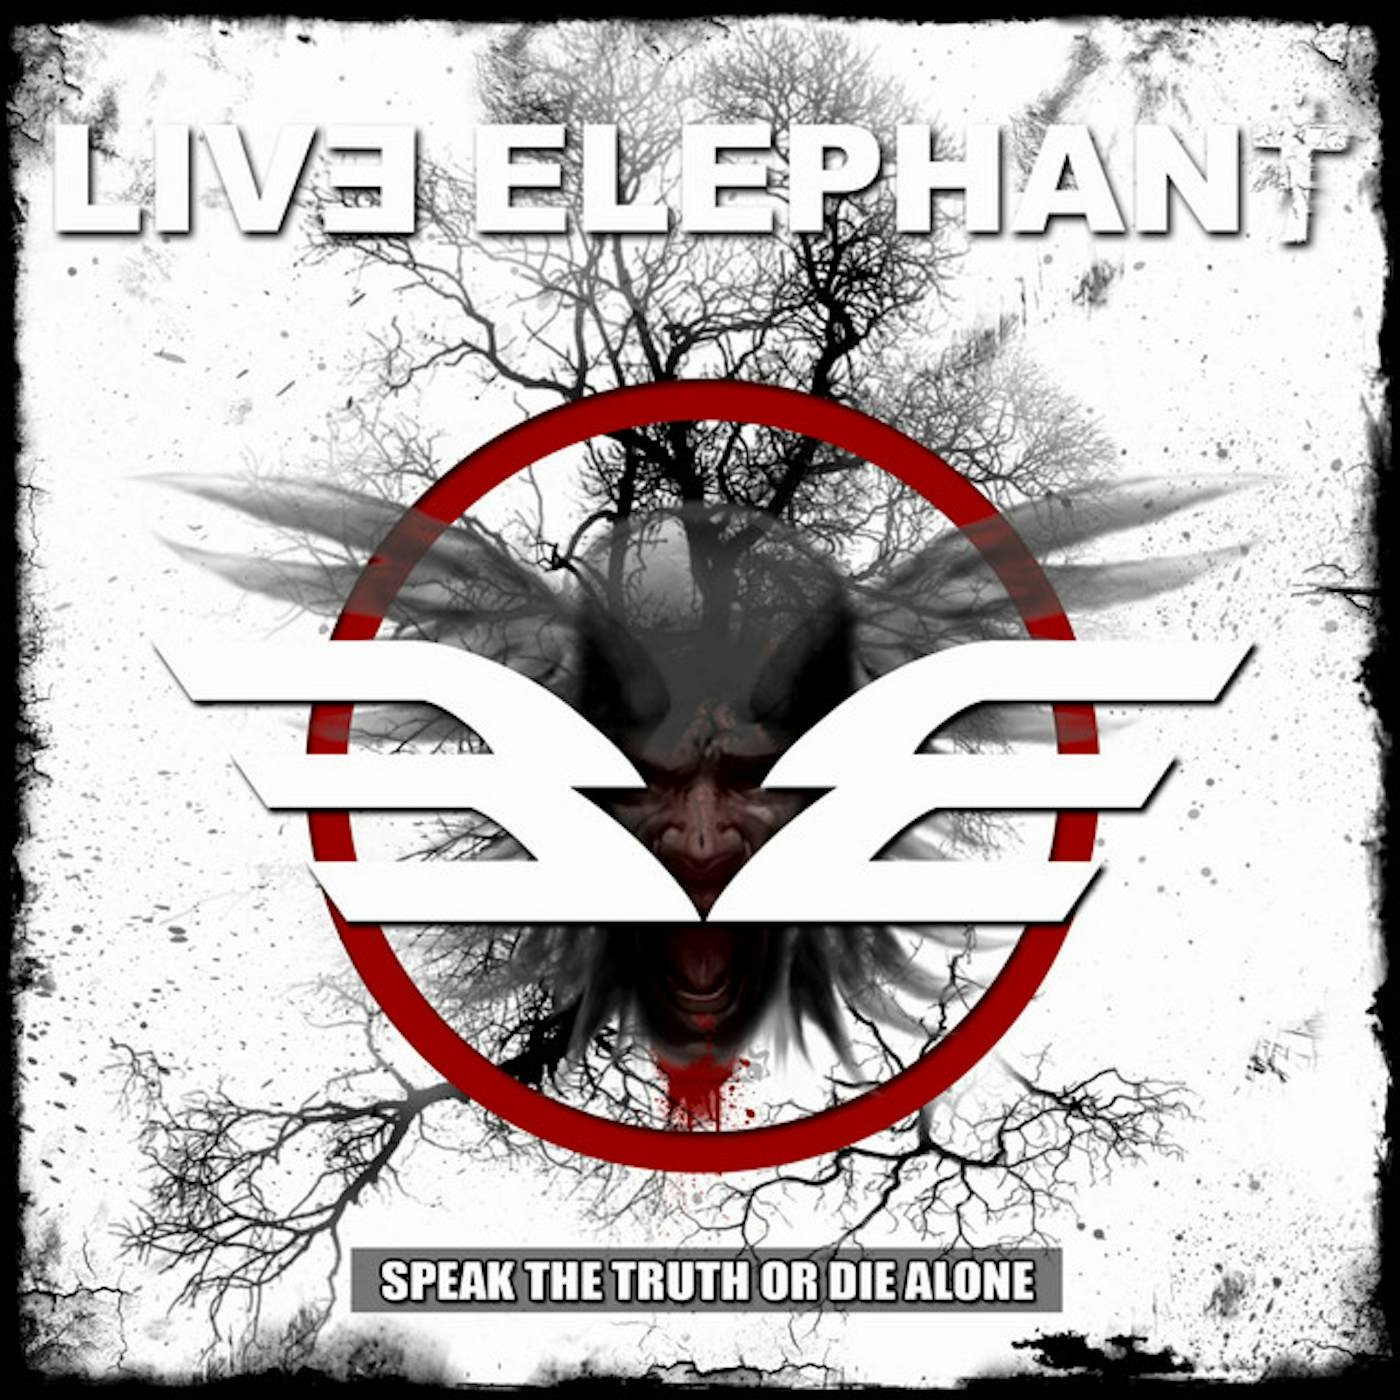 Live Elephant Speak the Truth or Die Alone Vinyl Record